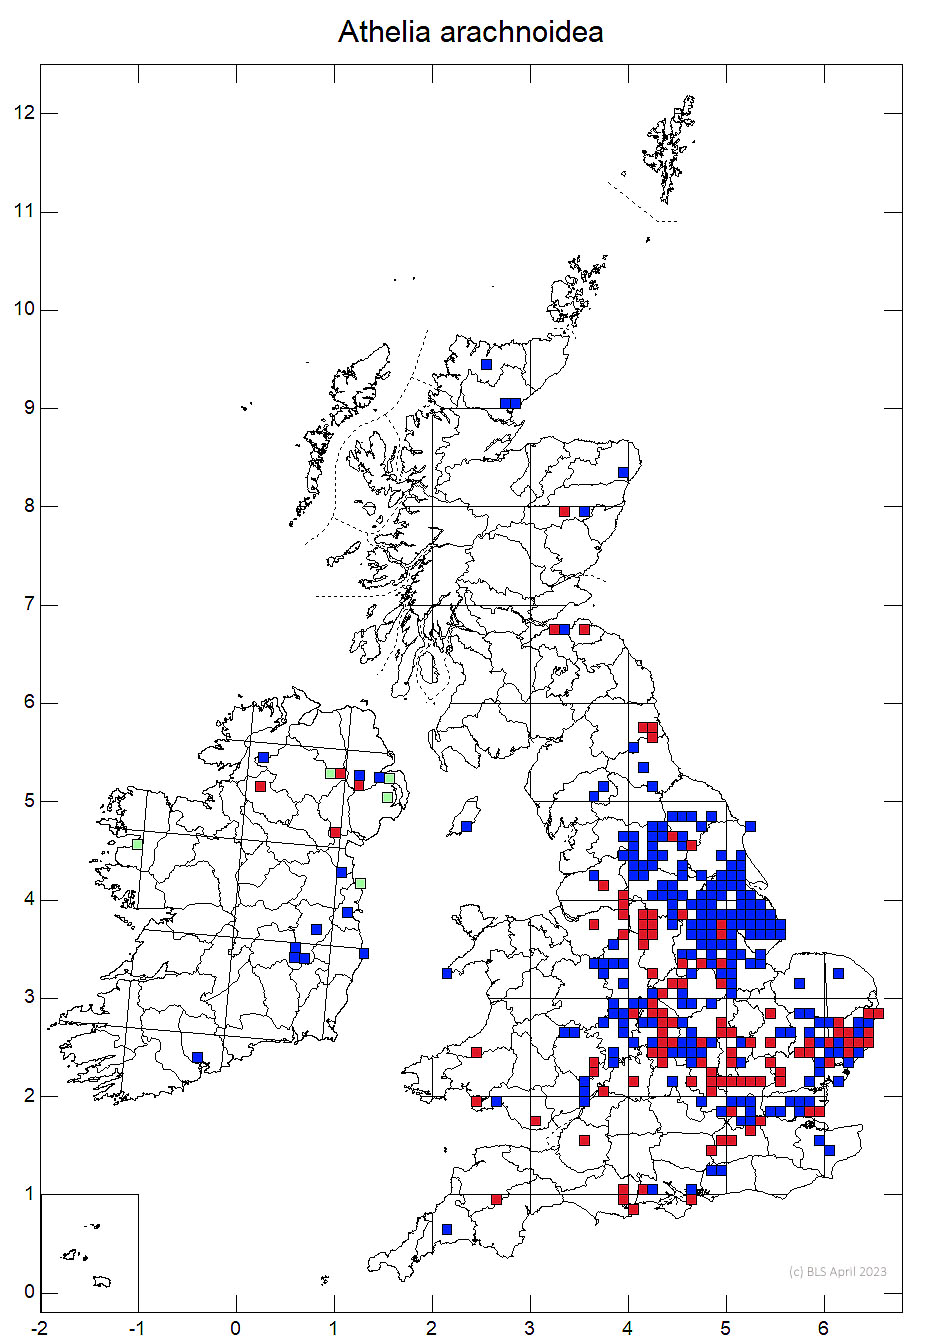 Athelia arachnoidea 10km sq distribution map